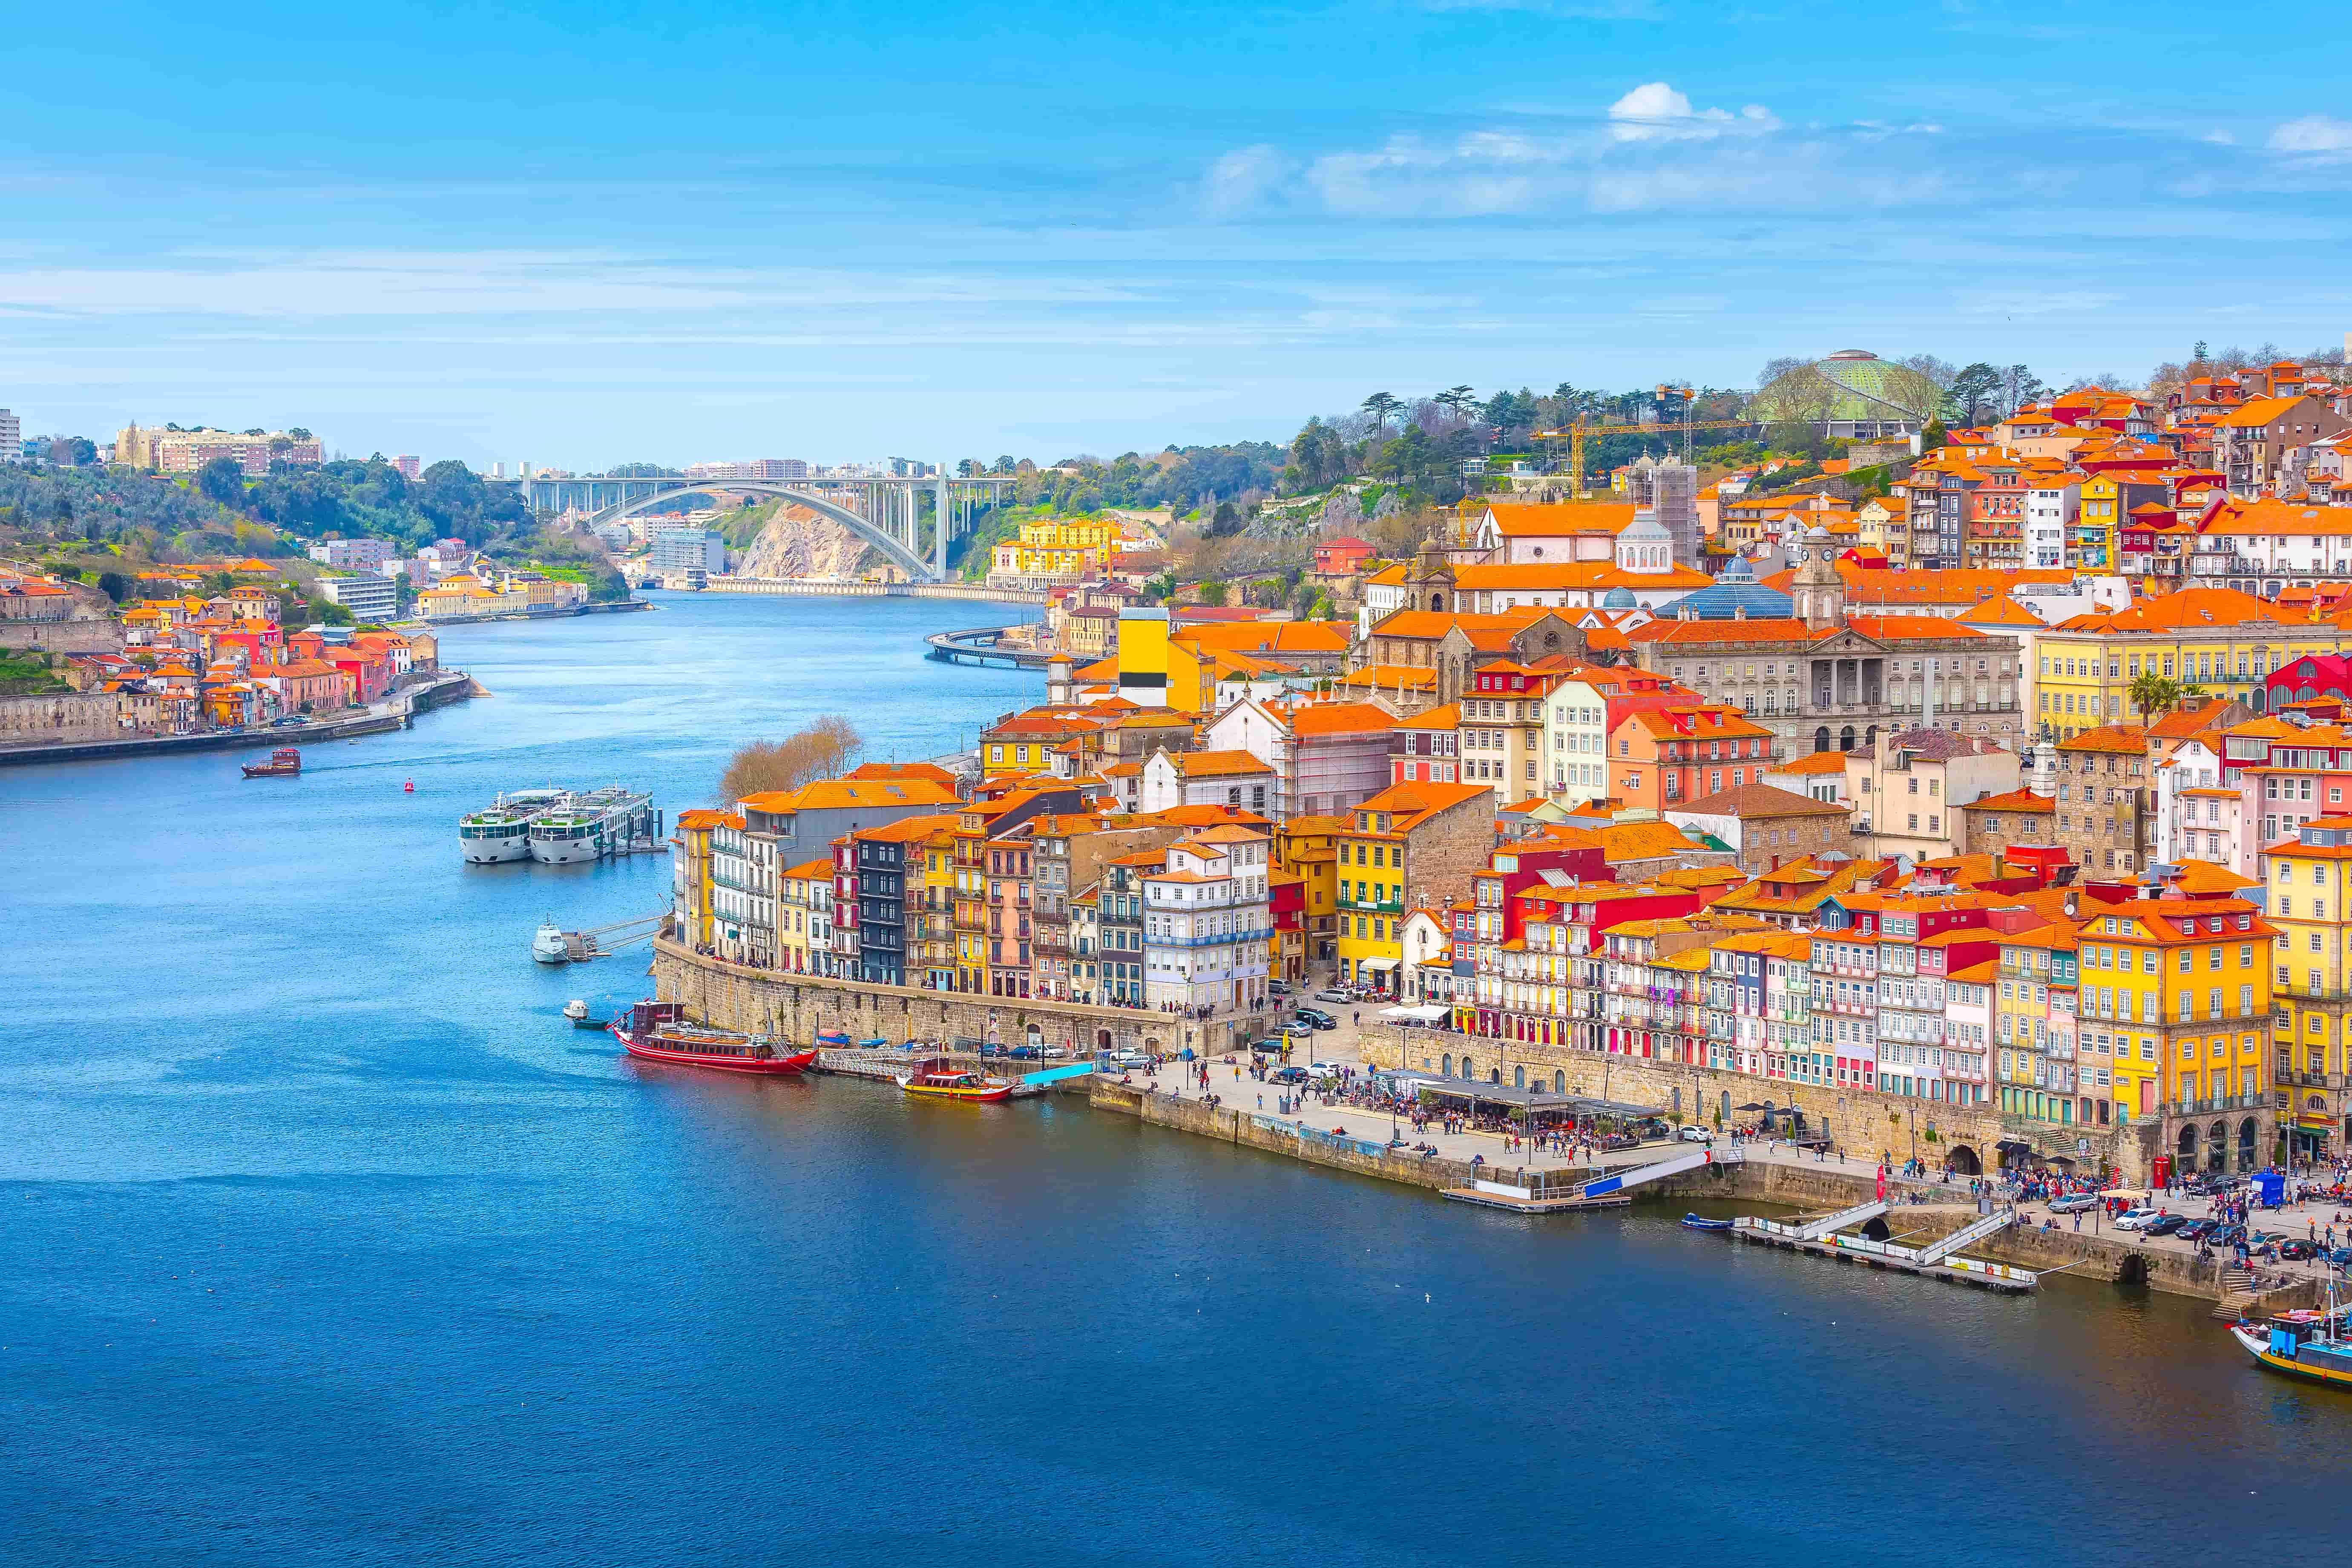 How many bridges cross over the Douro River in Porto?